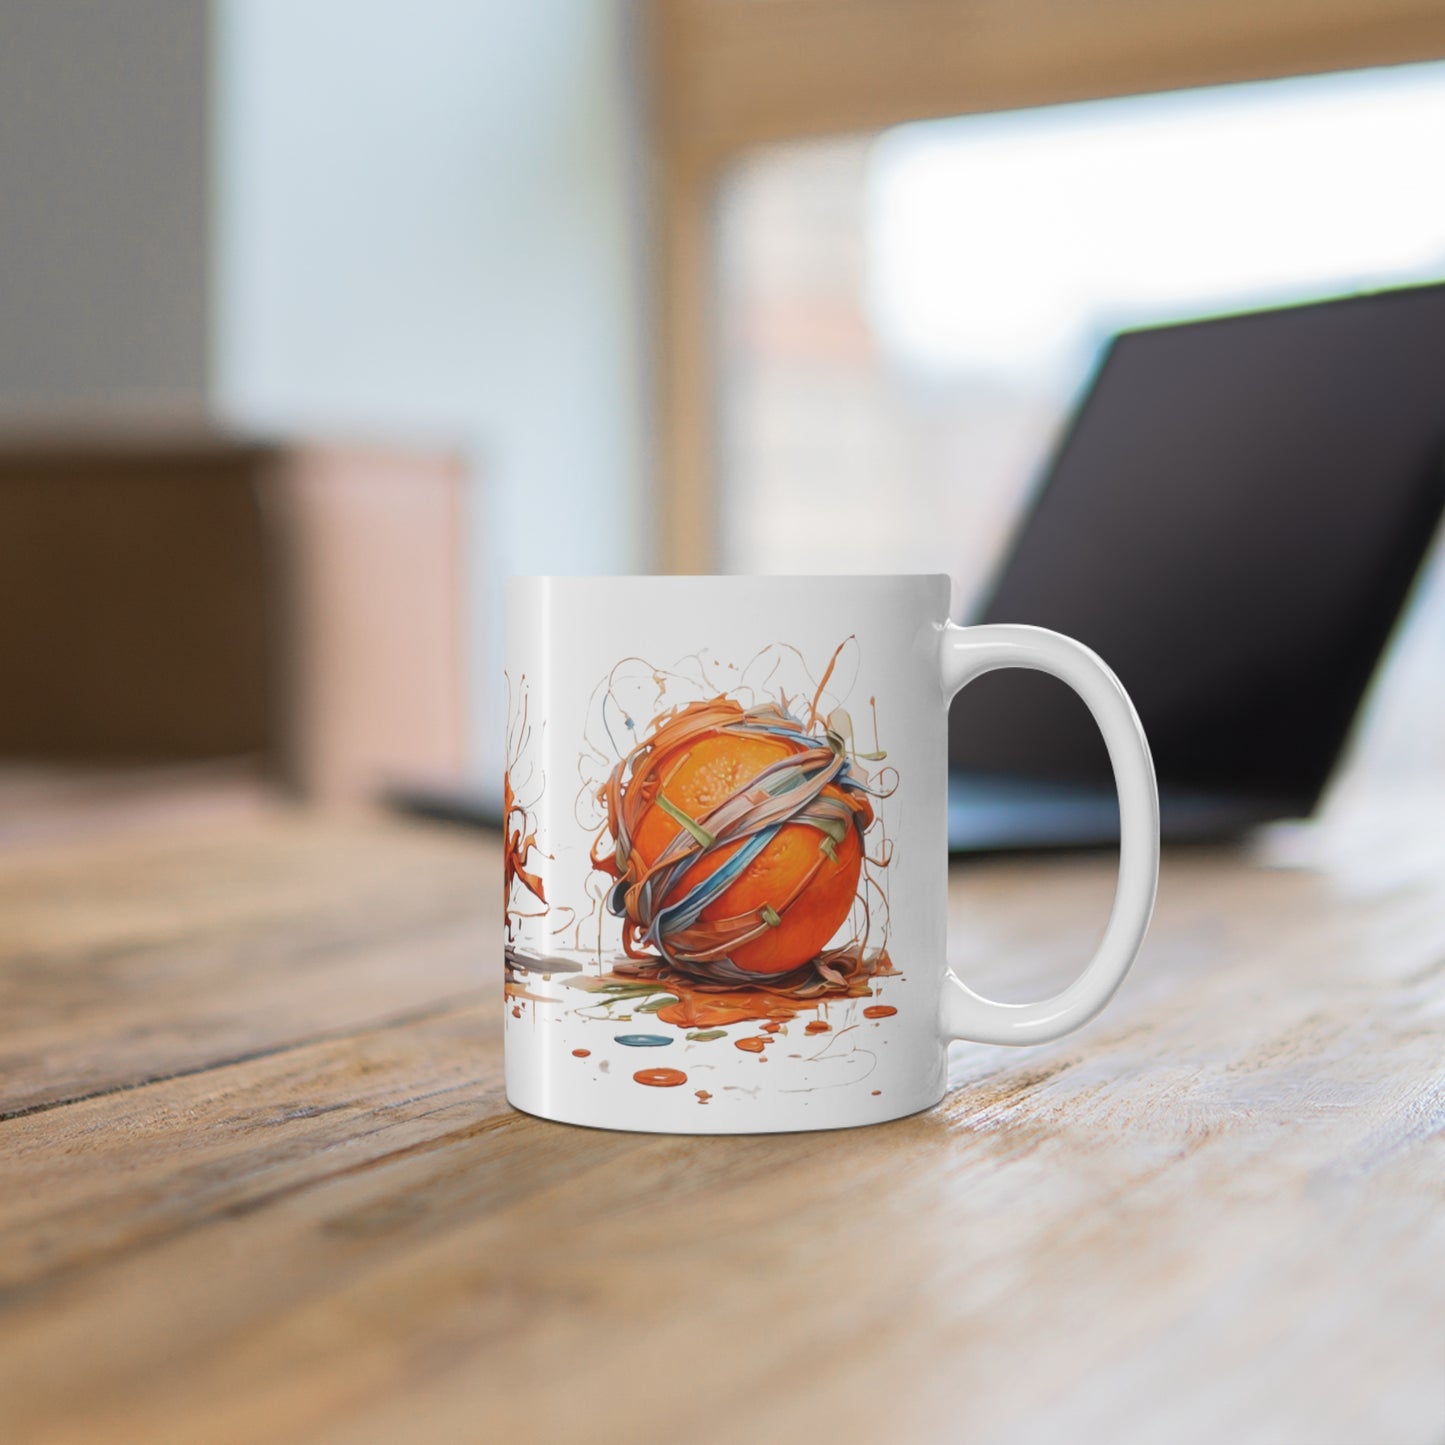 Colourful Messy Orange Fruits Mug - Ceramic Coffee Mug 11oz